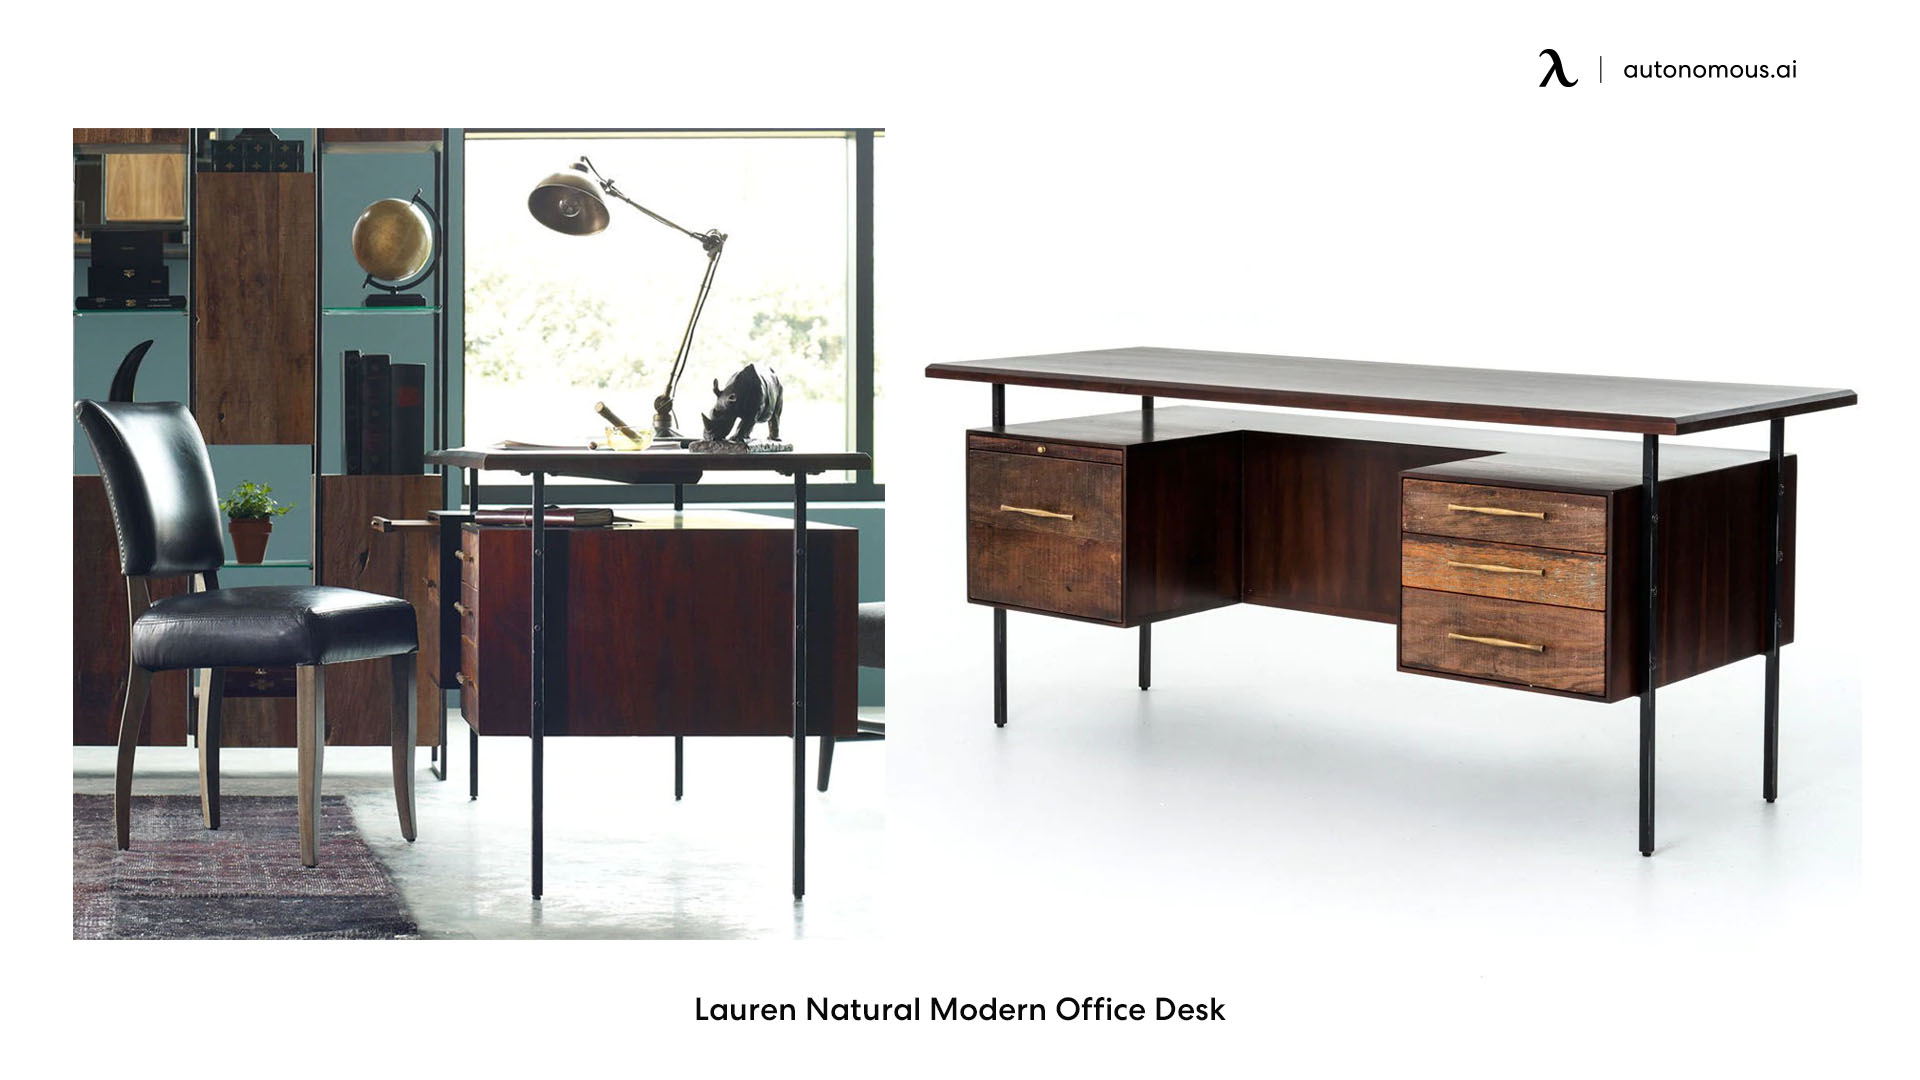 Lauren Natural Modern Office Desk